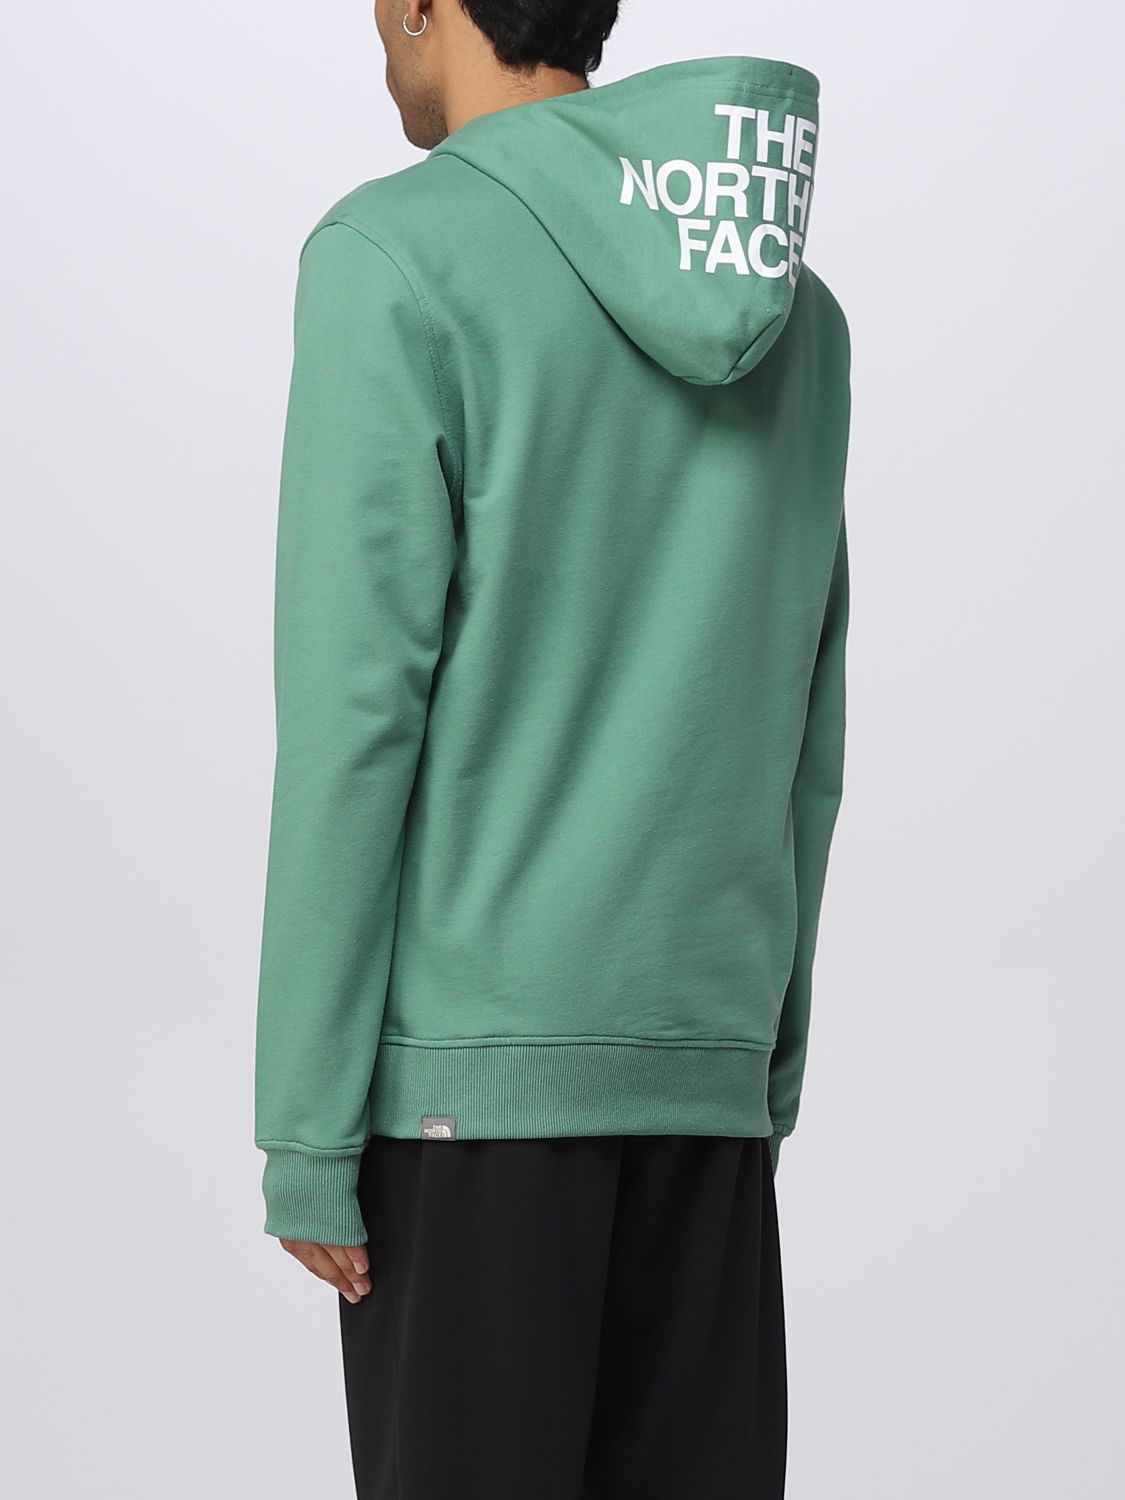 Sweatshirt The North Face: The North Face Herren Sweatshirt grün 3